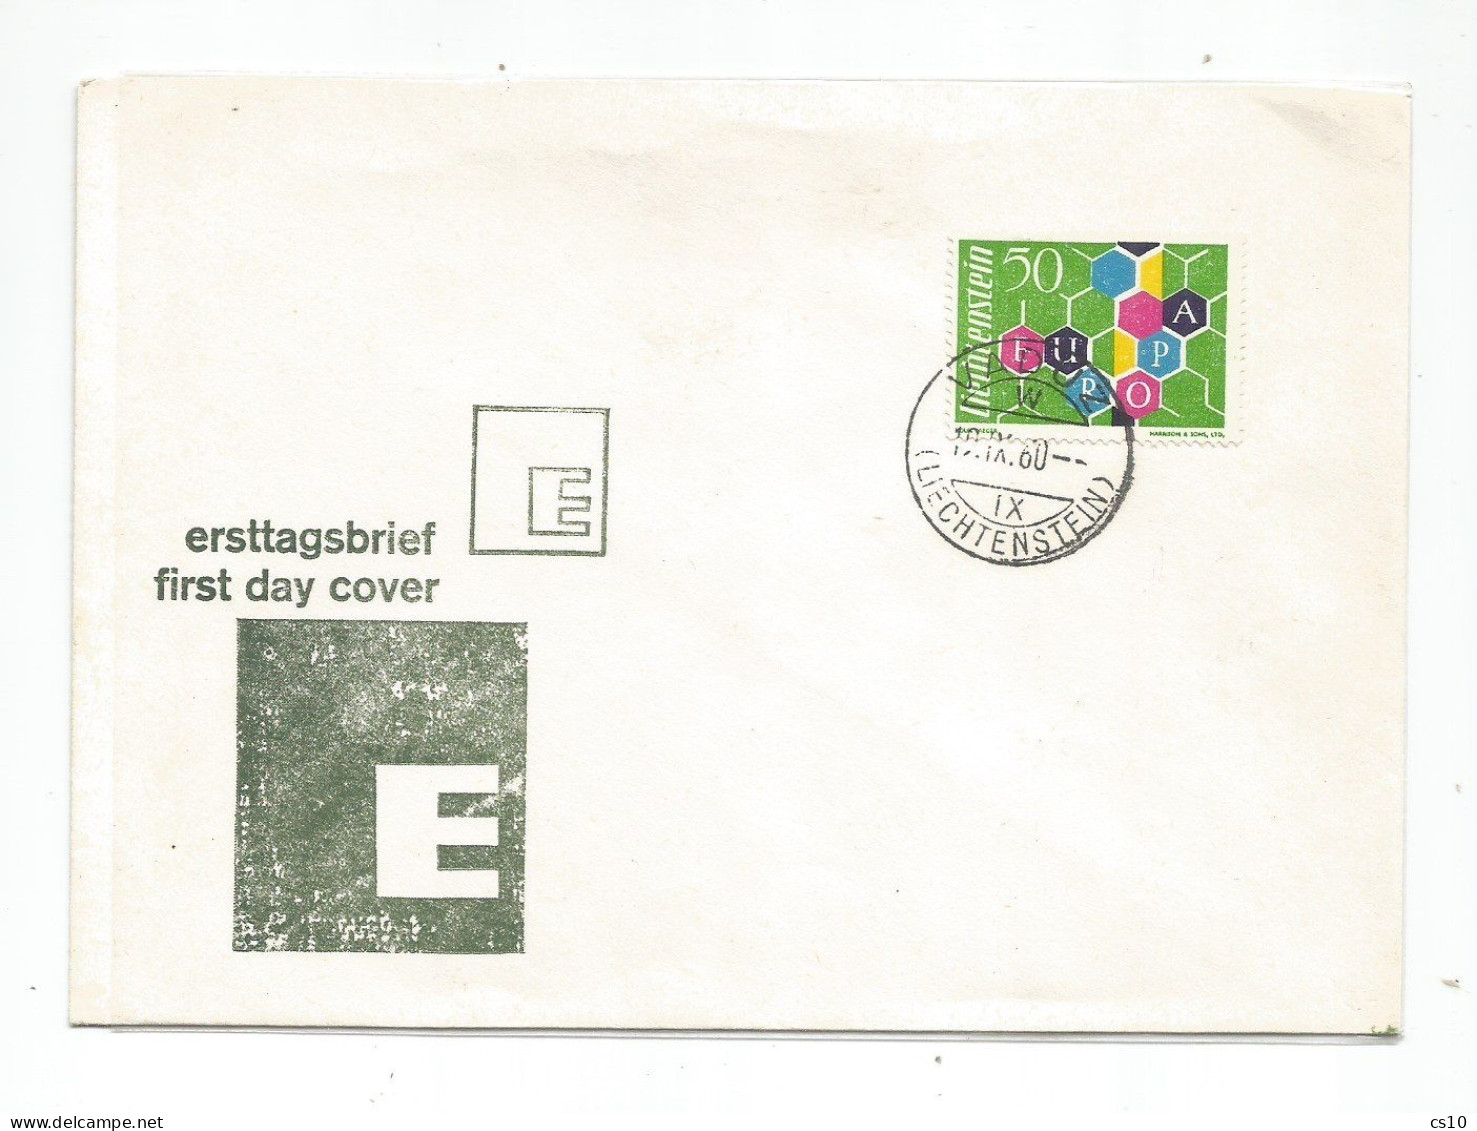 SPACEFILLER FAKE Cept 1960 Liechtenstein Issue False Stamp On False Cover With False PMK - 1960